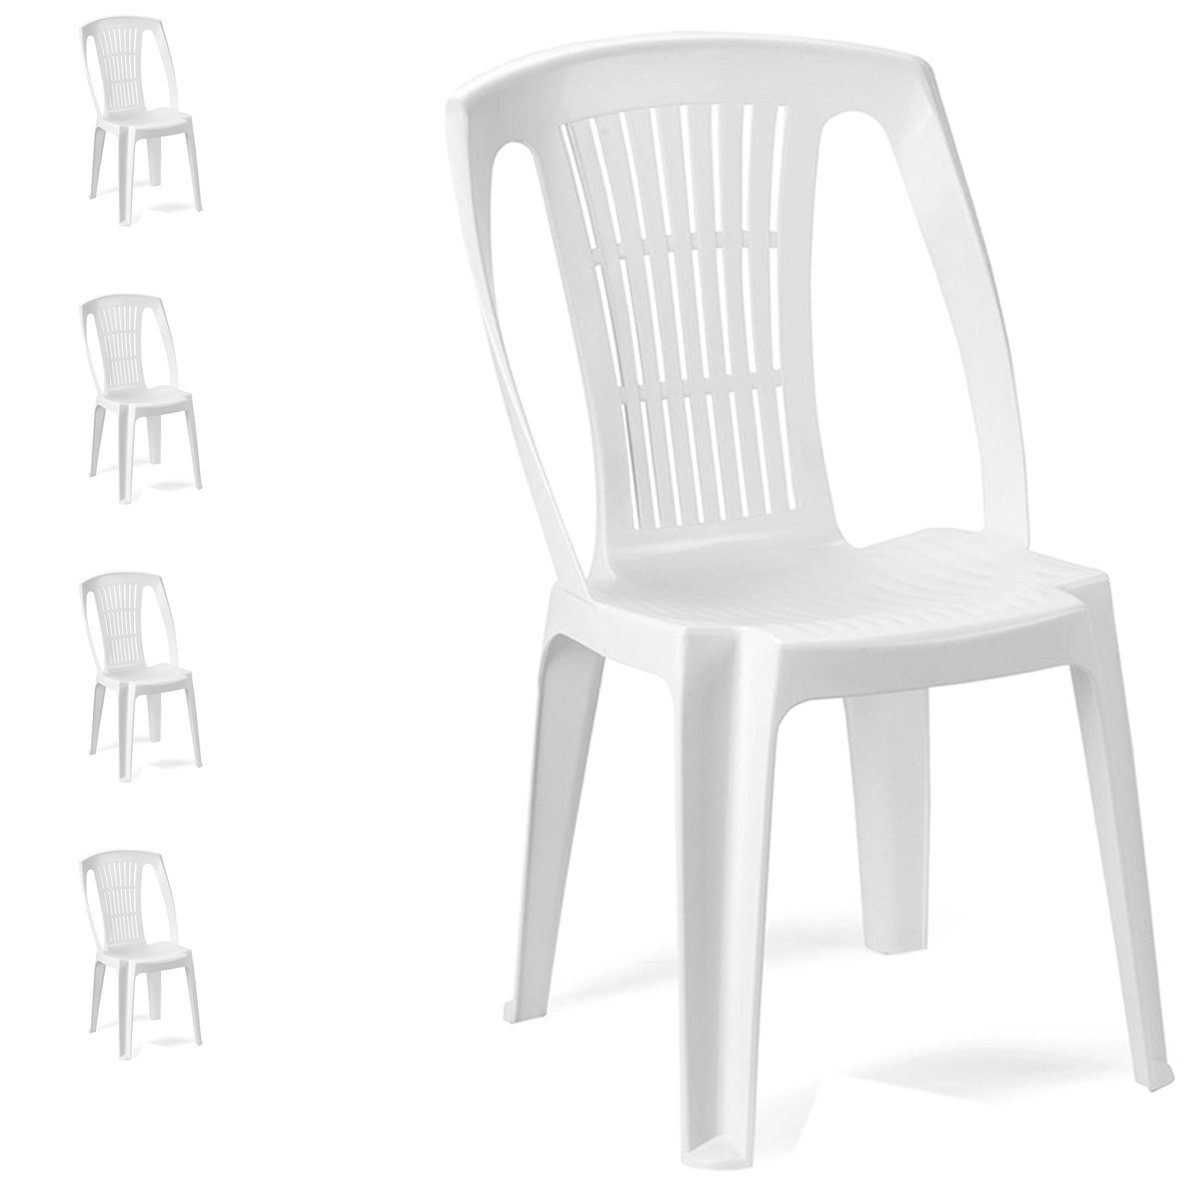 INDA-Exclusiv Armlehnstuhl 6 Gartenstuhl Stapelsessel Stück Stapelstuhl Weiß Kunststoff